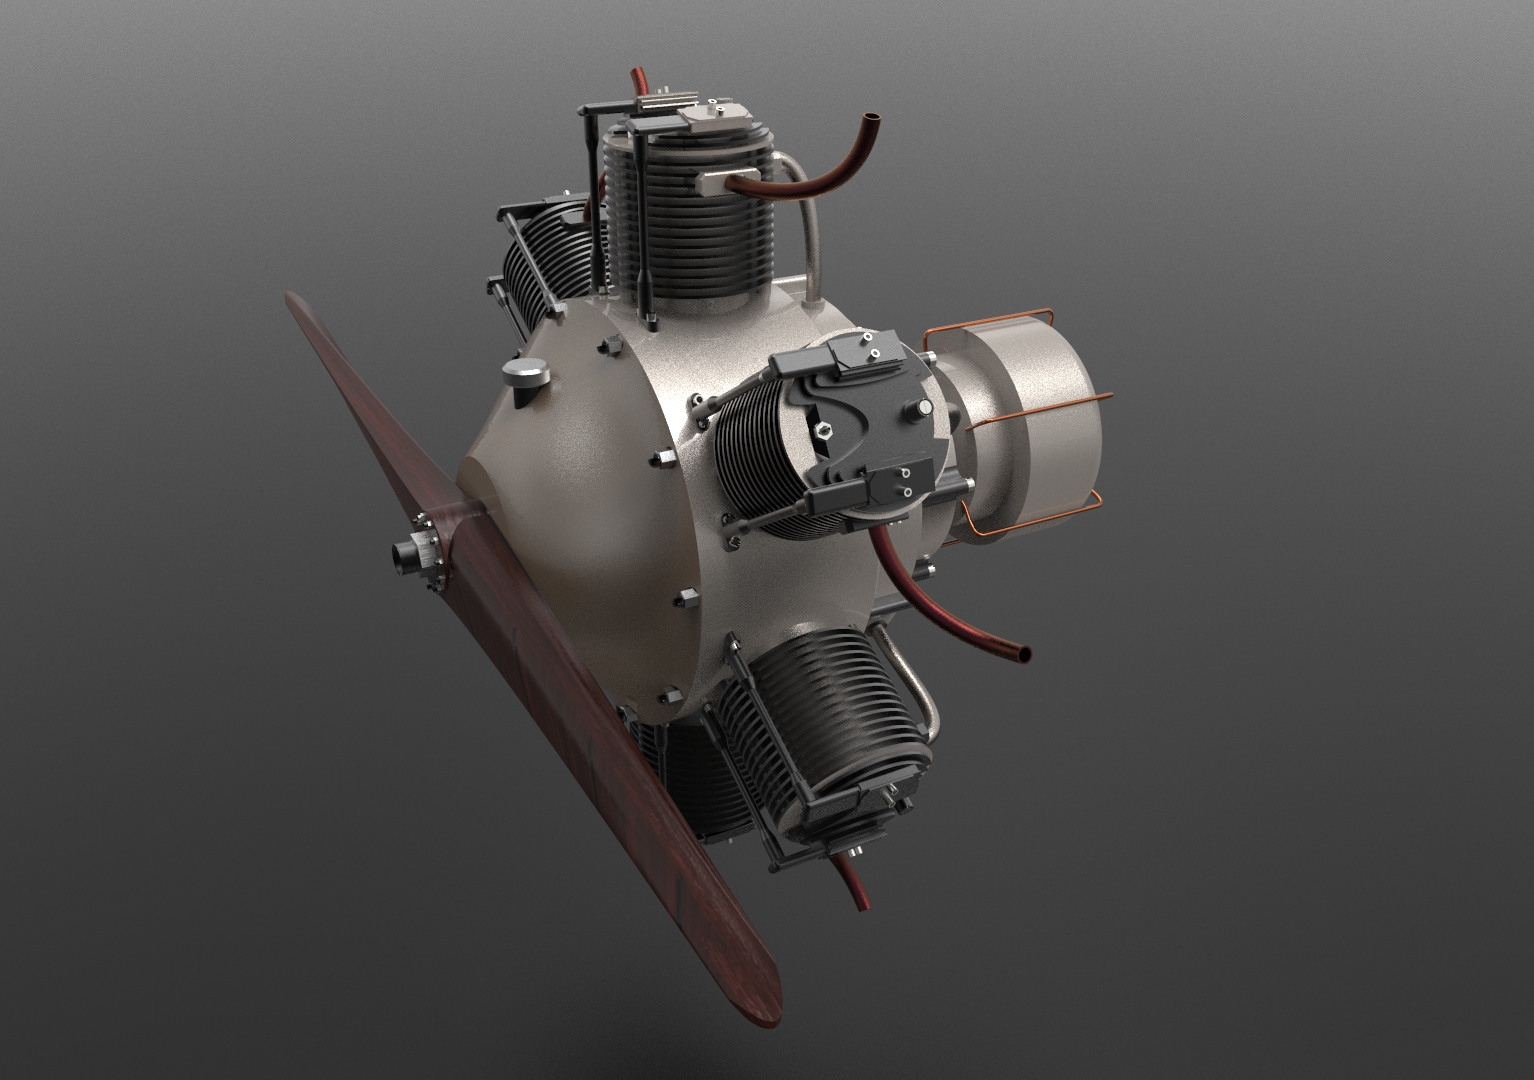 Radial Engine星形六缸发动机